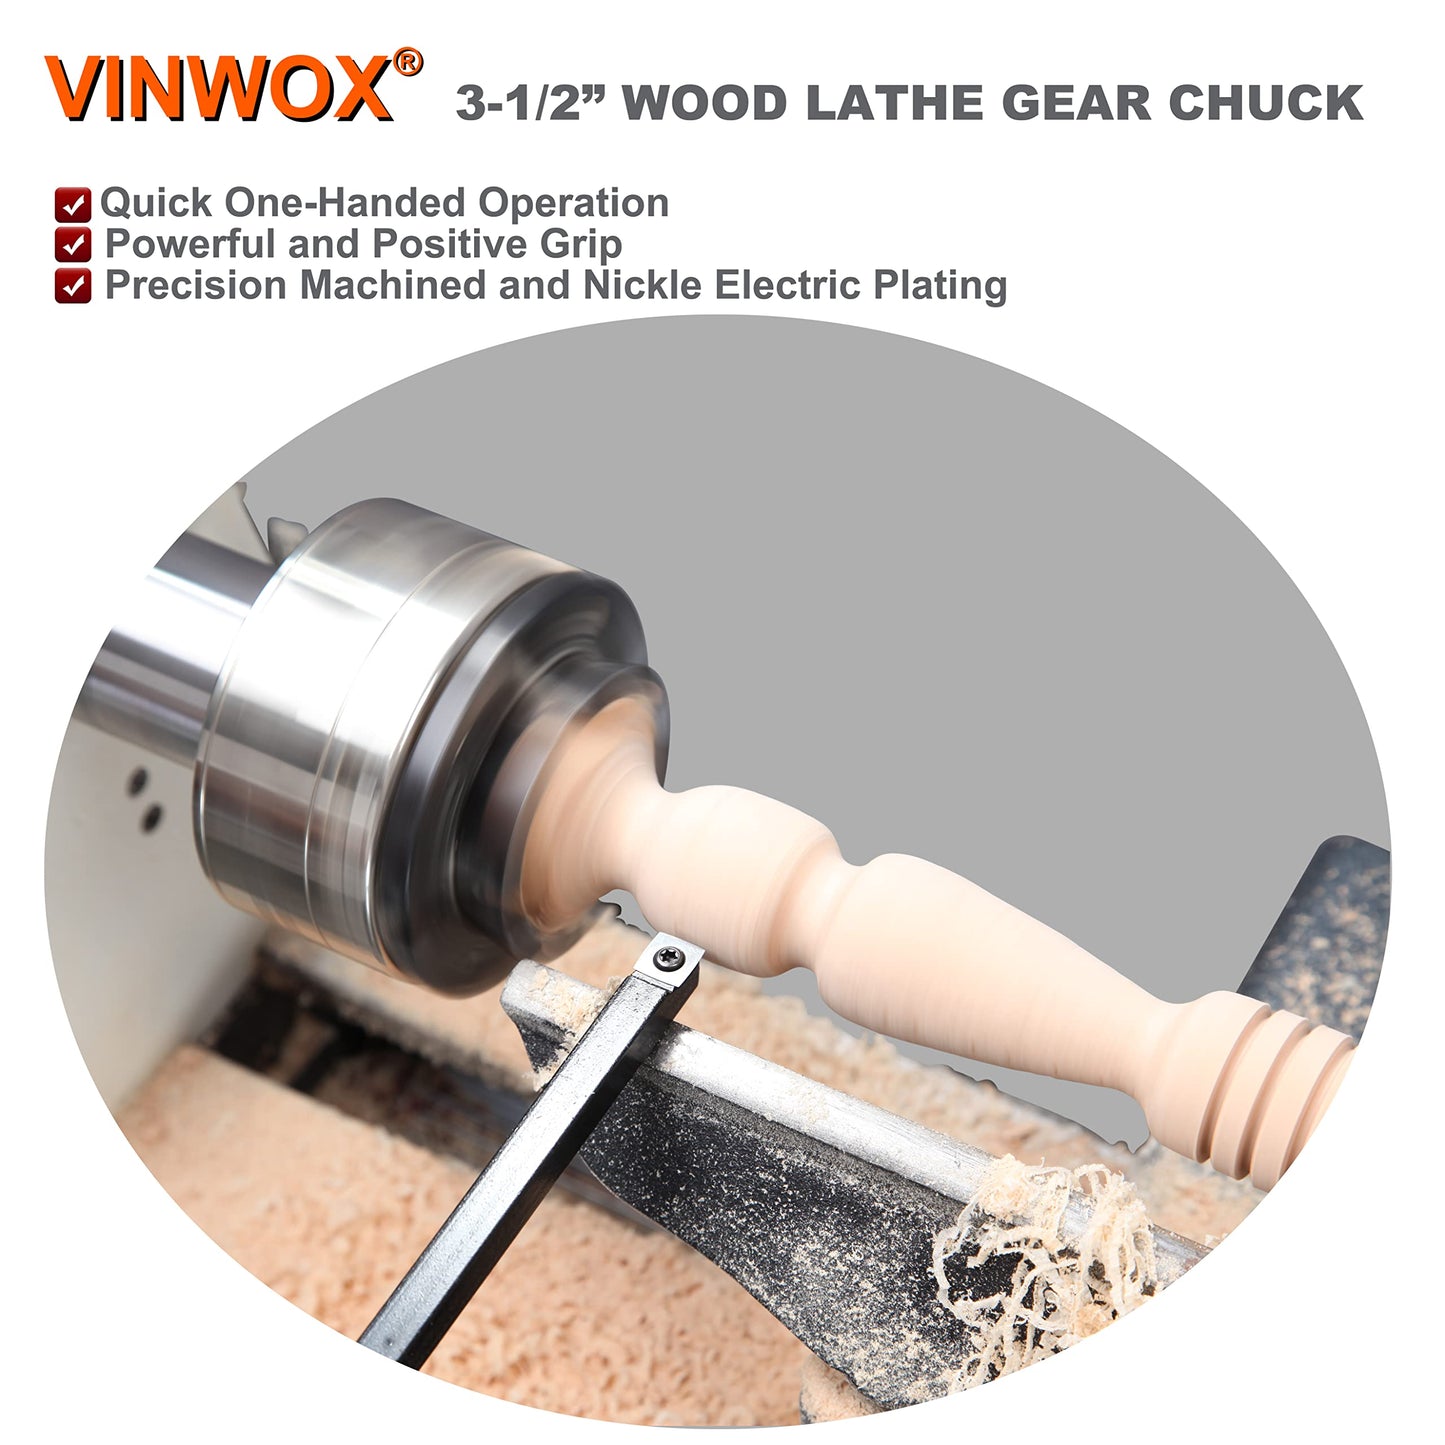 VINWOX SCK4-3.5NV-SET Mini, Midi and Heavy-Duty 3-1/2” Wood Lathe Gear Chuck Set, Wood Lathe Key Chuck Set, 4-Jaw Self-Centering Chuck, 1"x8TPI